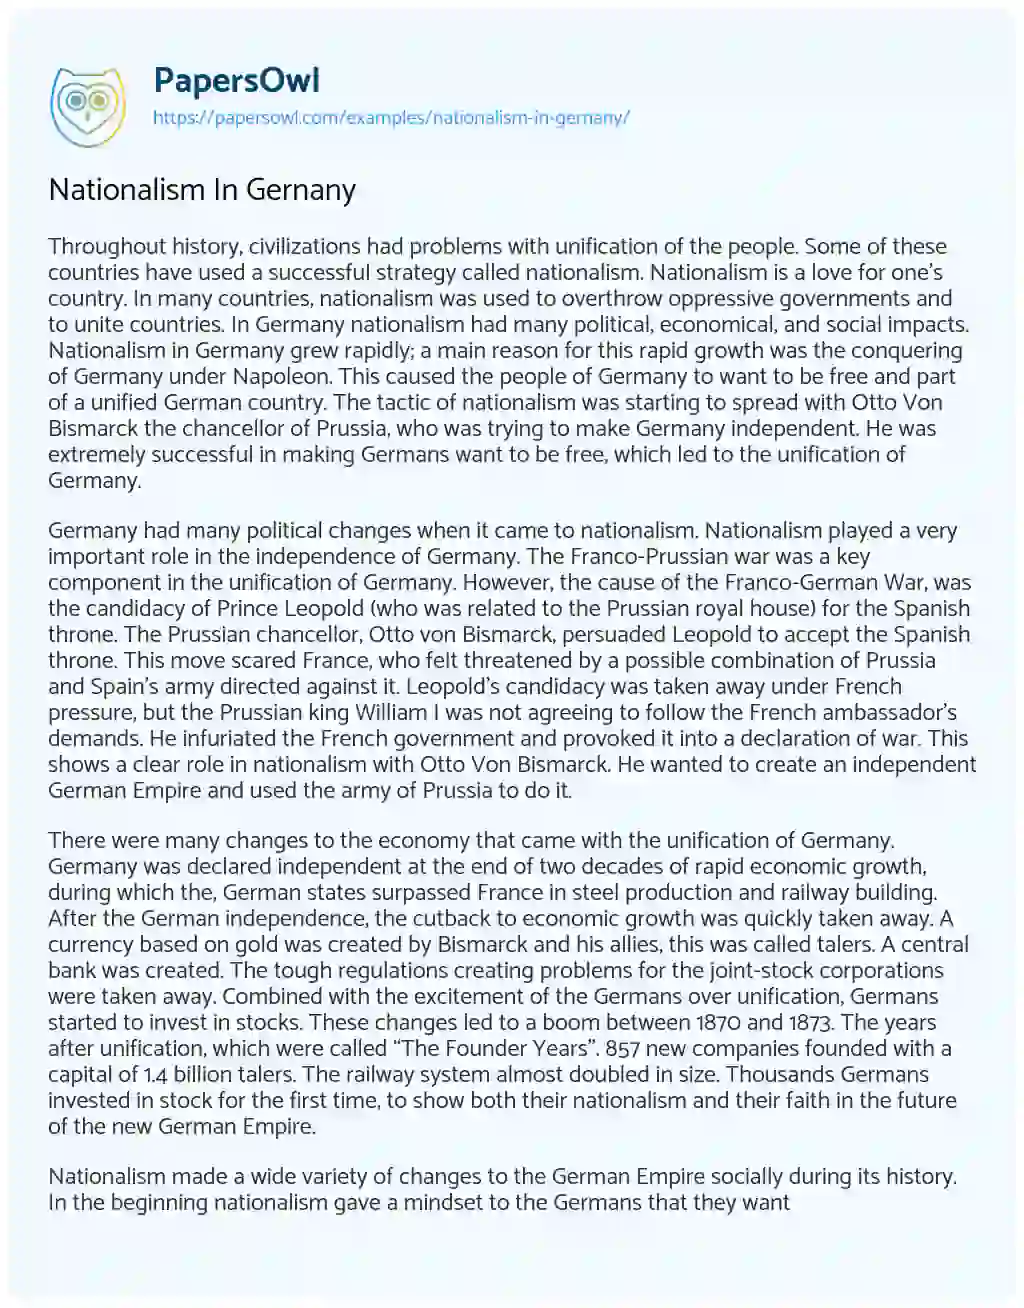 Essay on Nationalism in Gernany